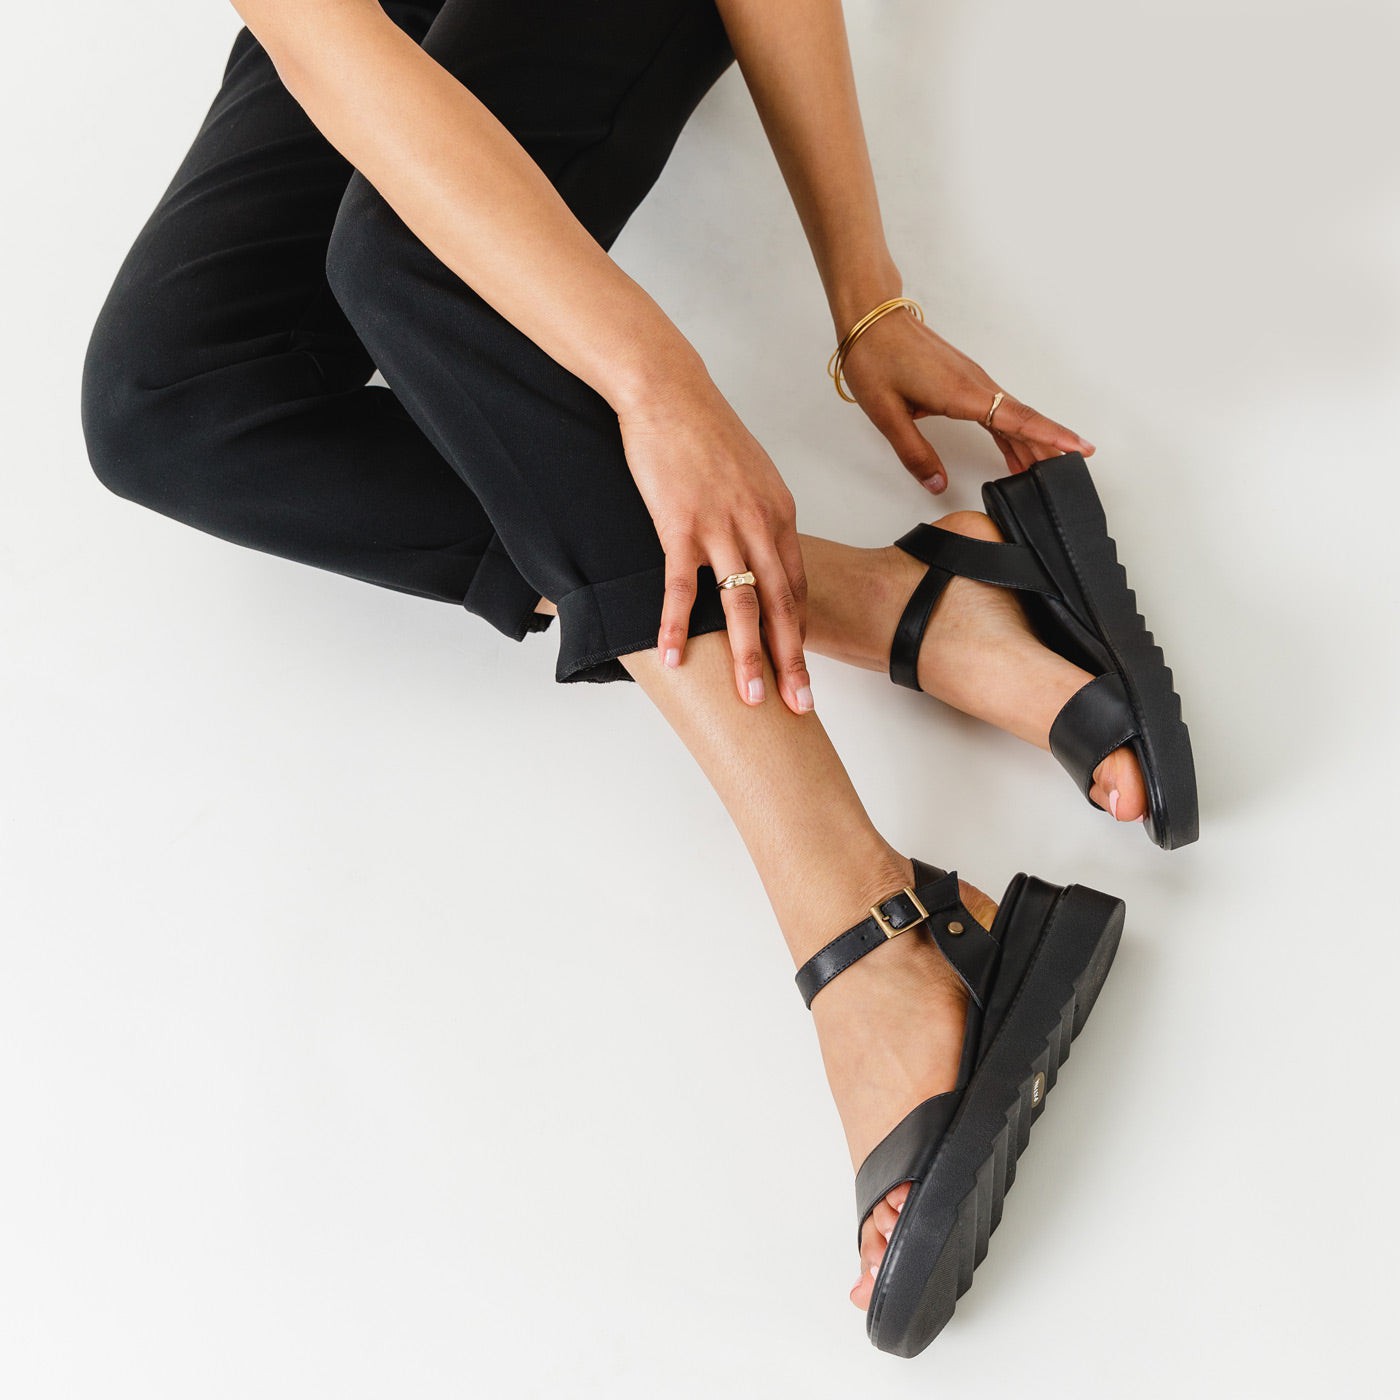 Cethrio Womens Comfortable Wedge Sandals- Roman Mid Heel Wedge